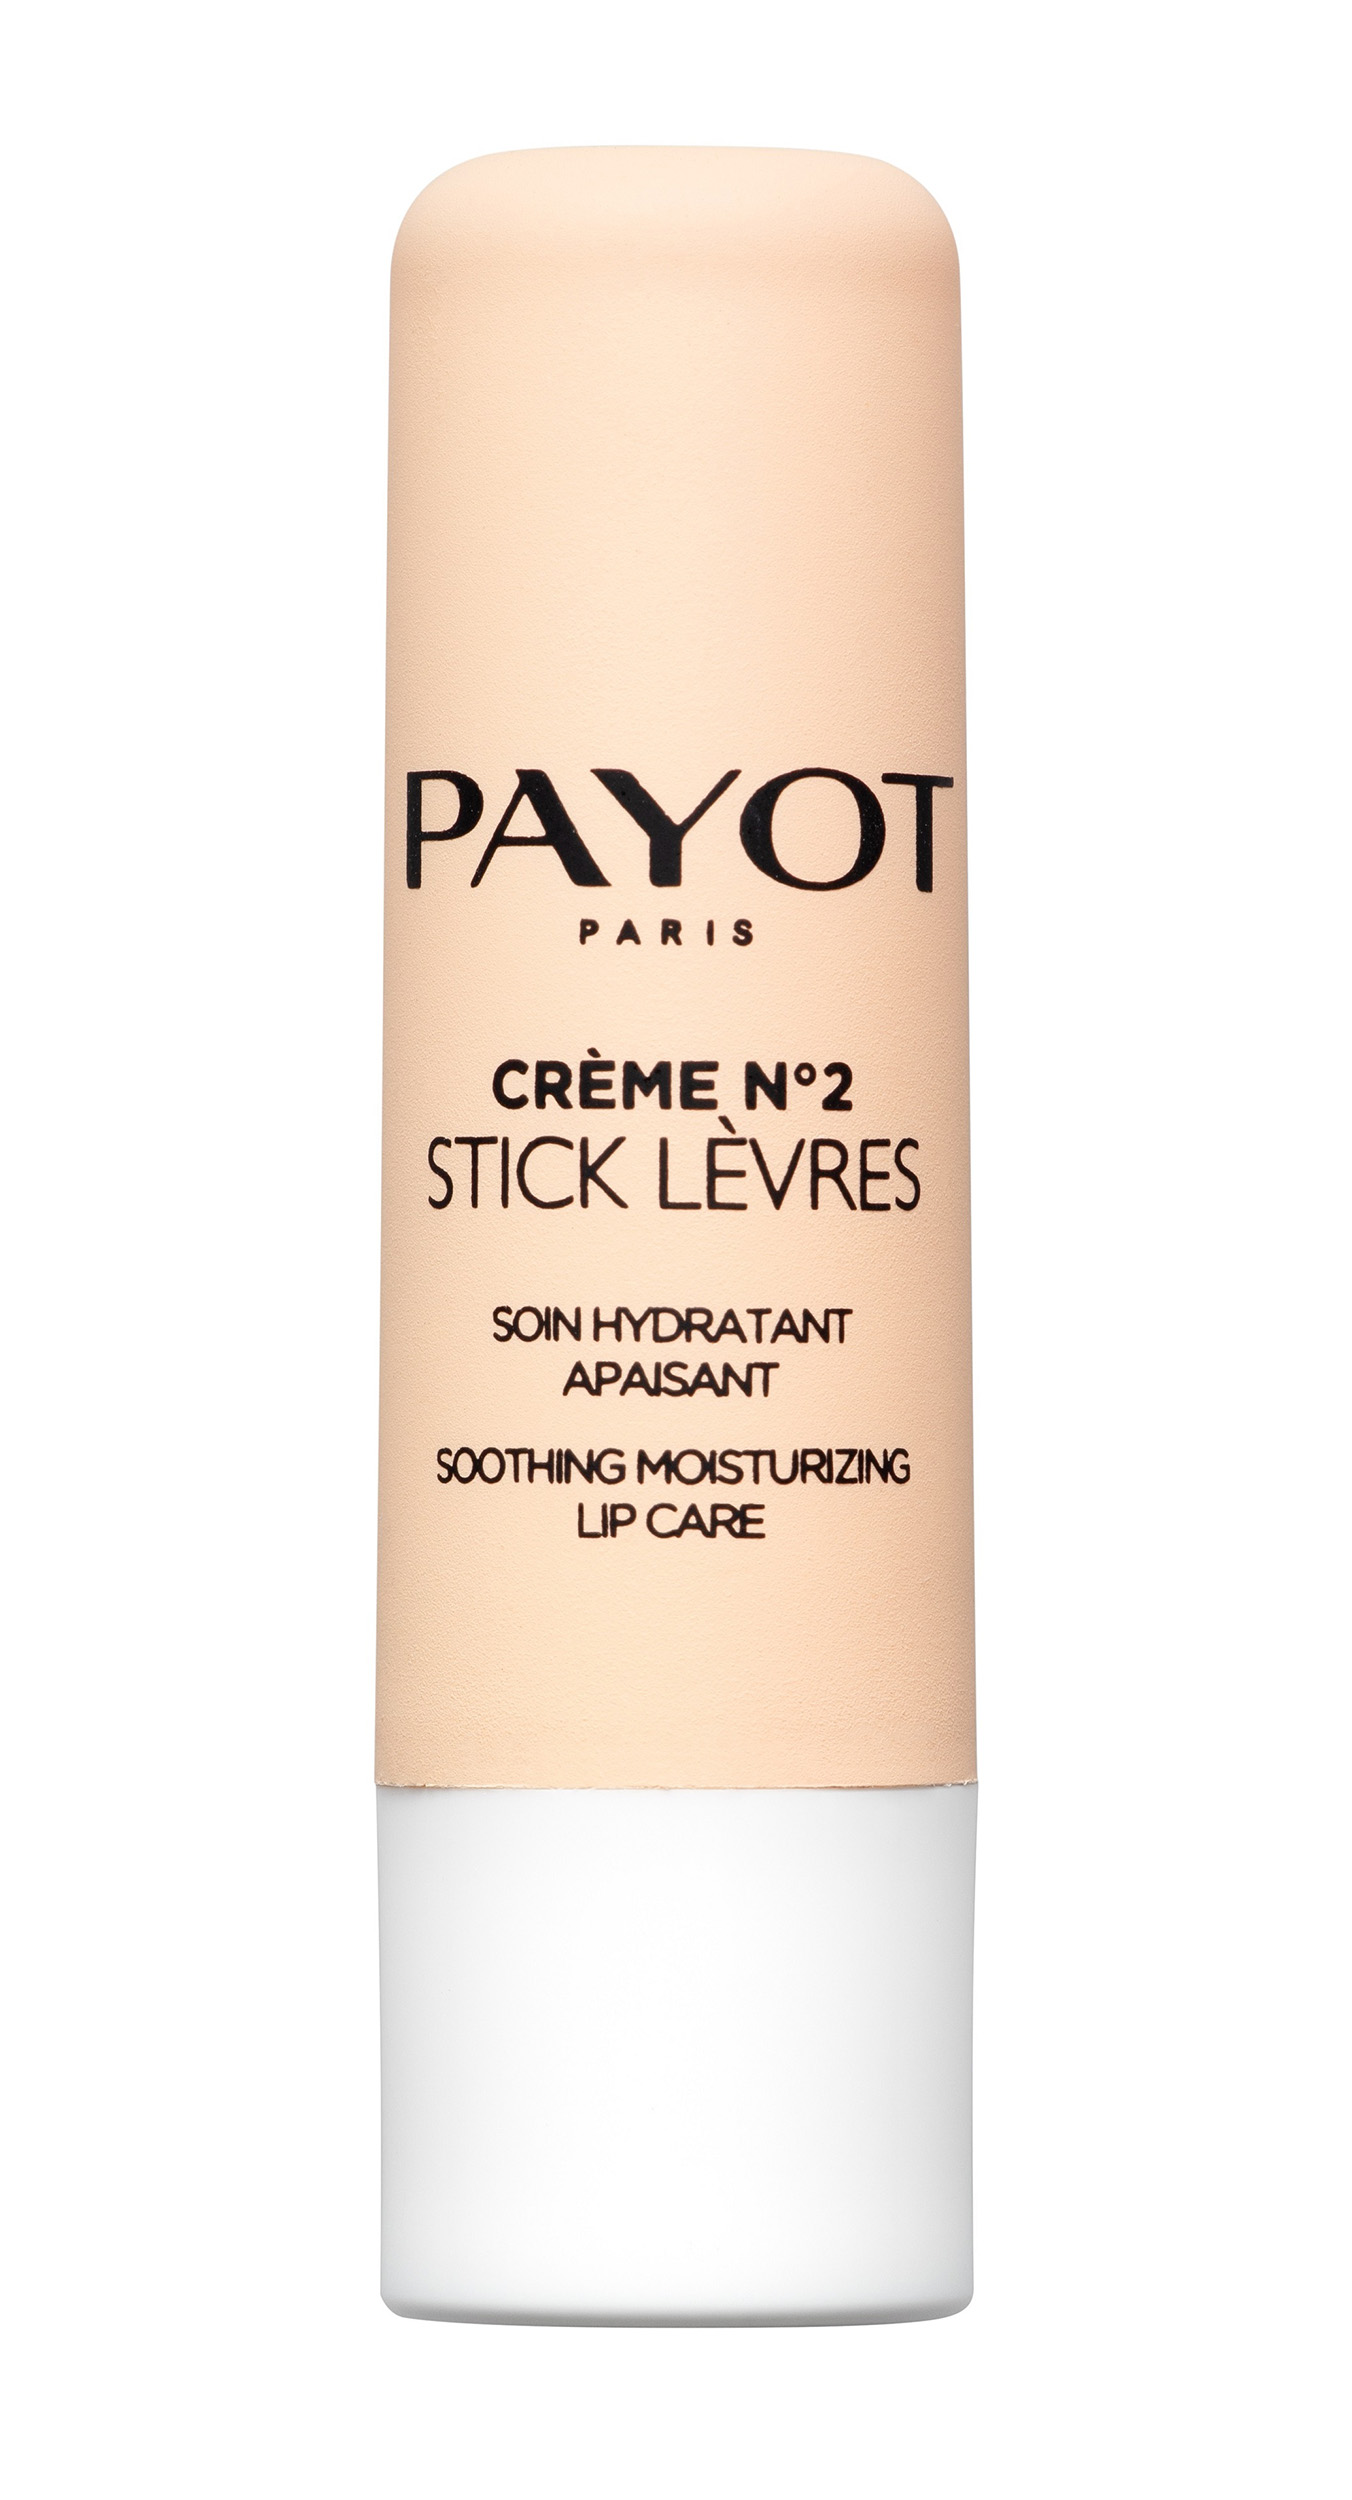 Payot Бальзам увлажняющий и успокаивающий кожу губ, 4 г (Payot, CREME N°2) от Pharmacosmetica.ru